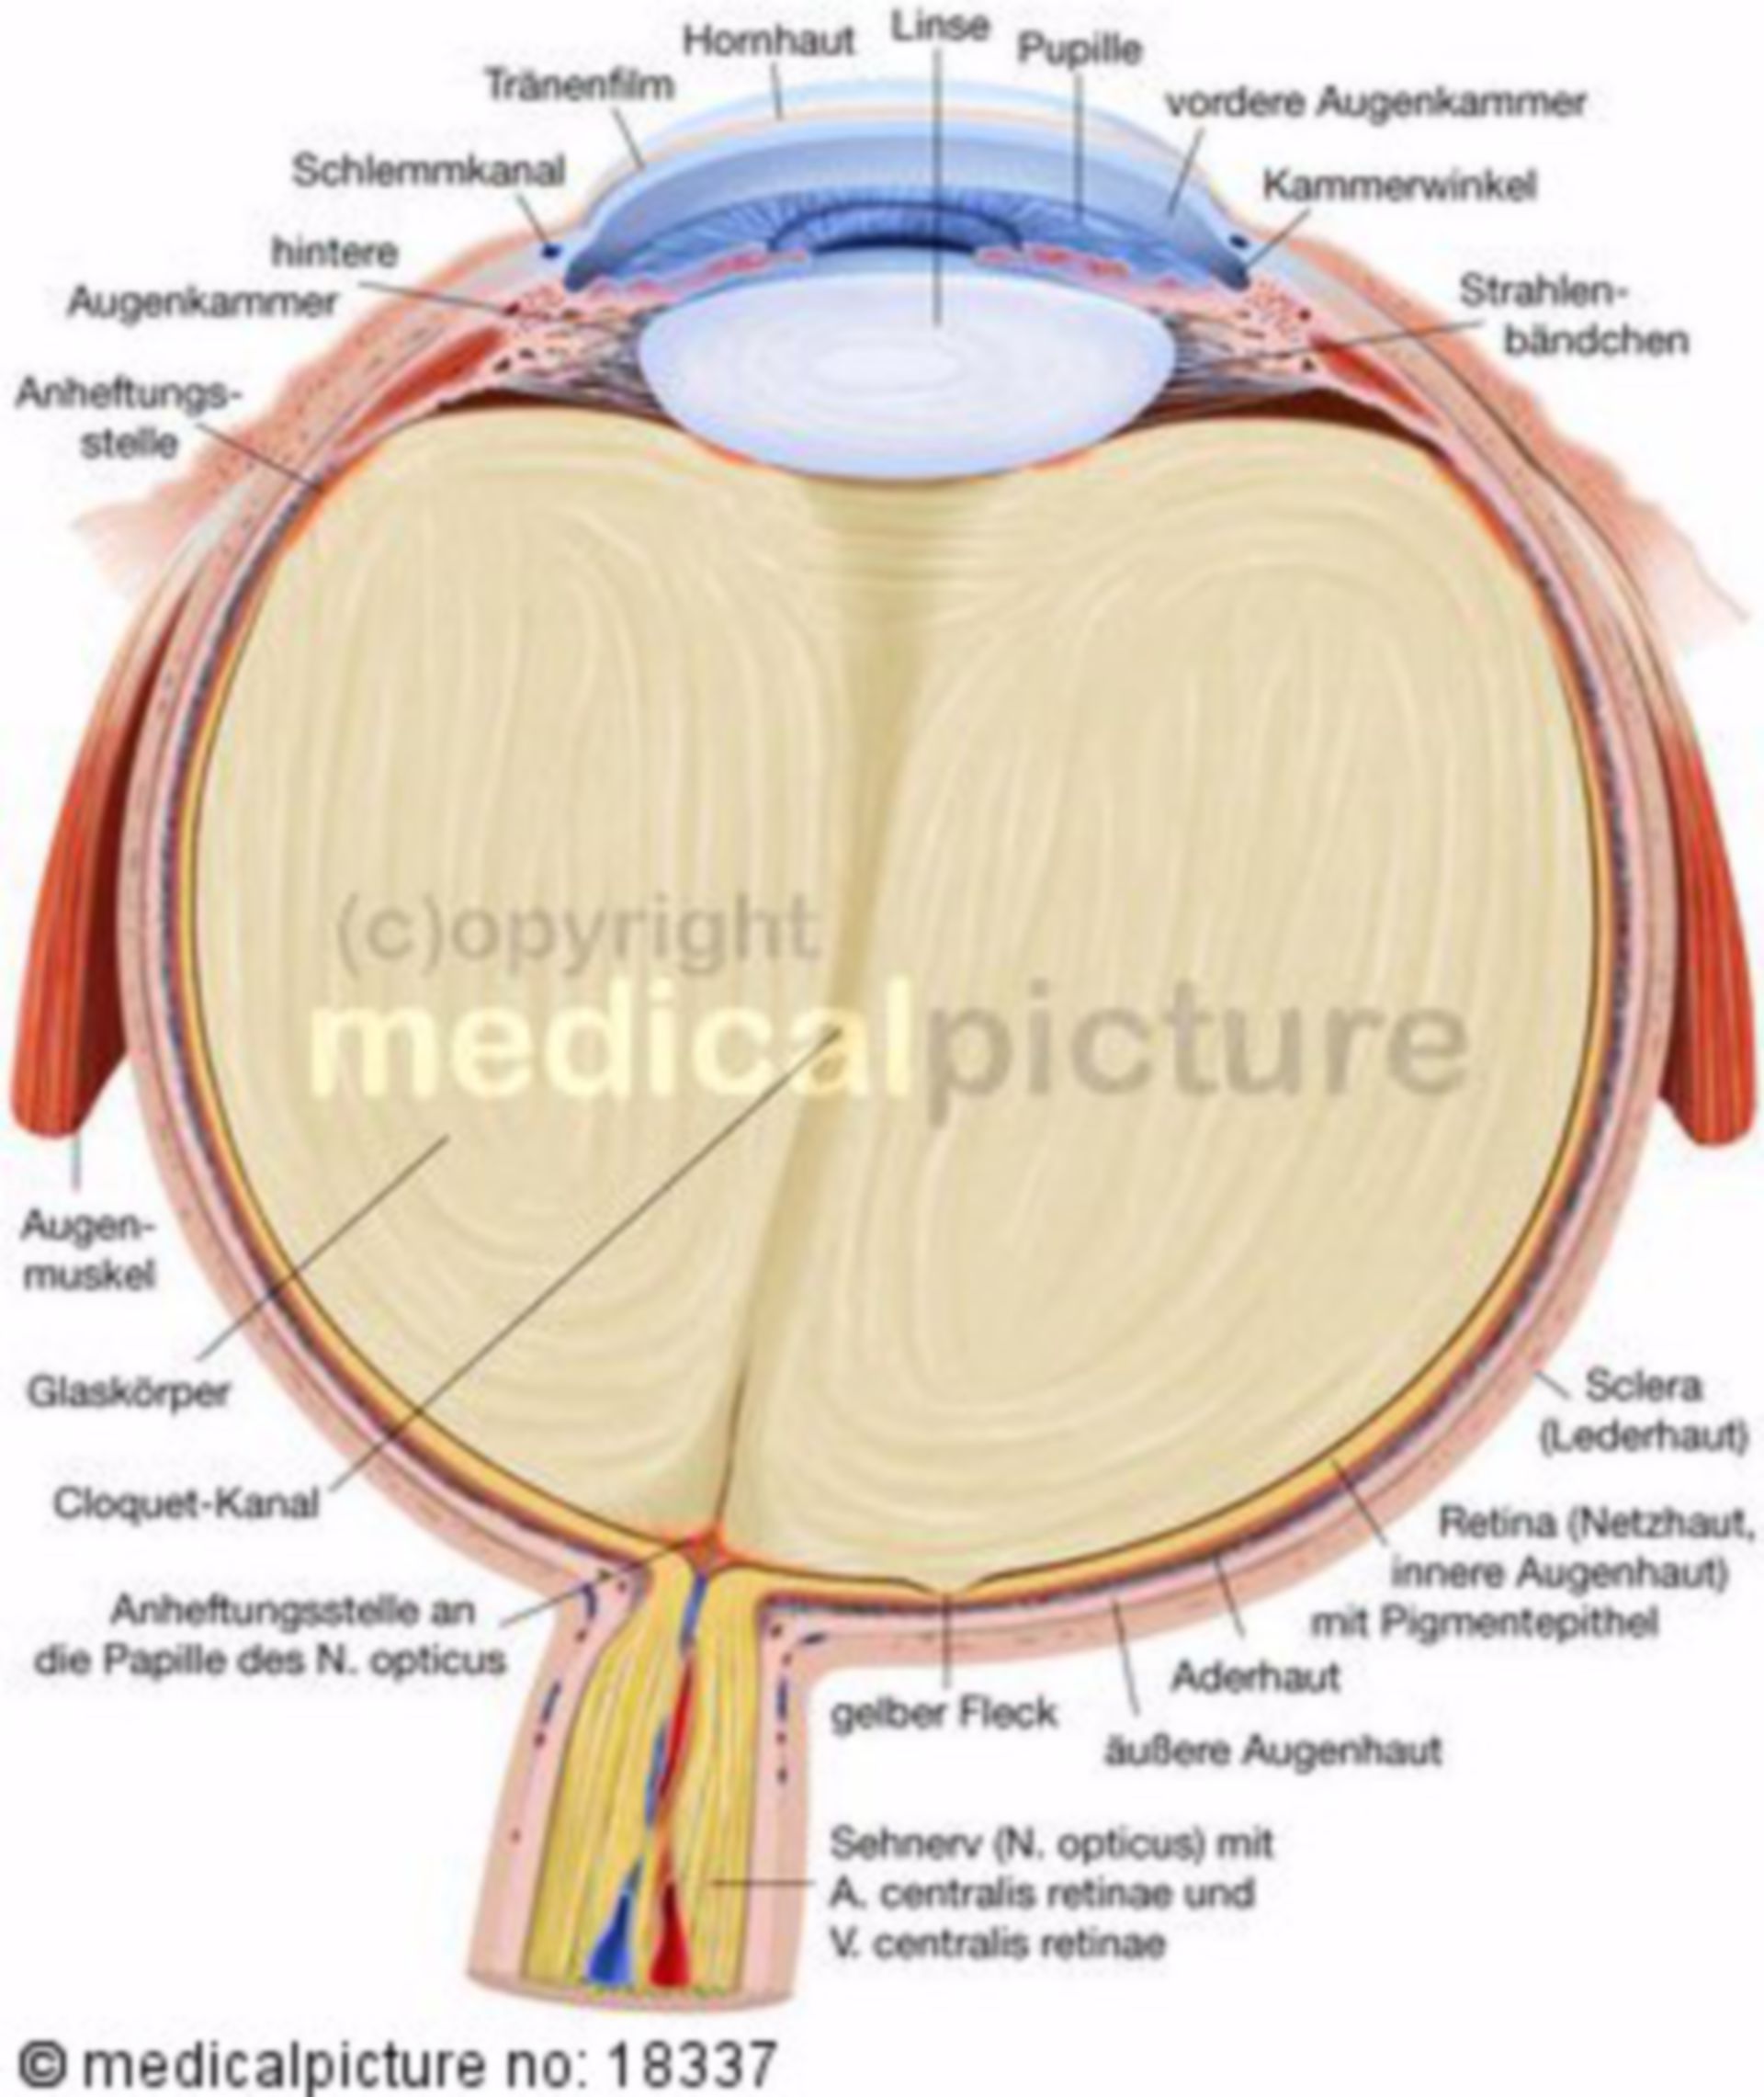 Section through an Eyeball